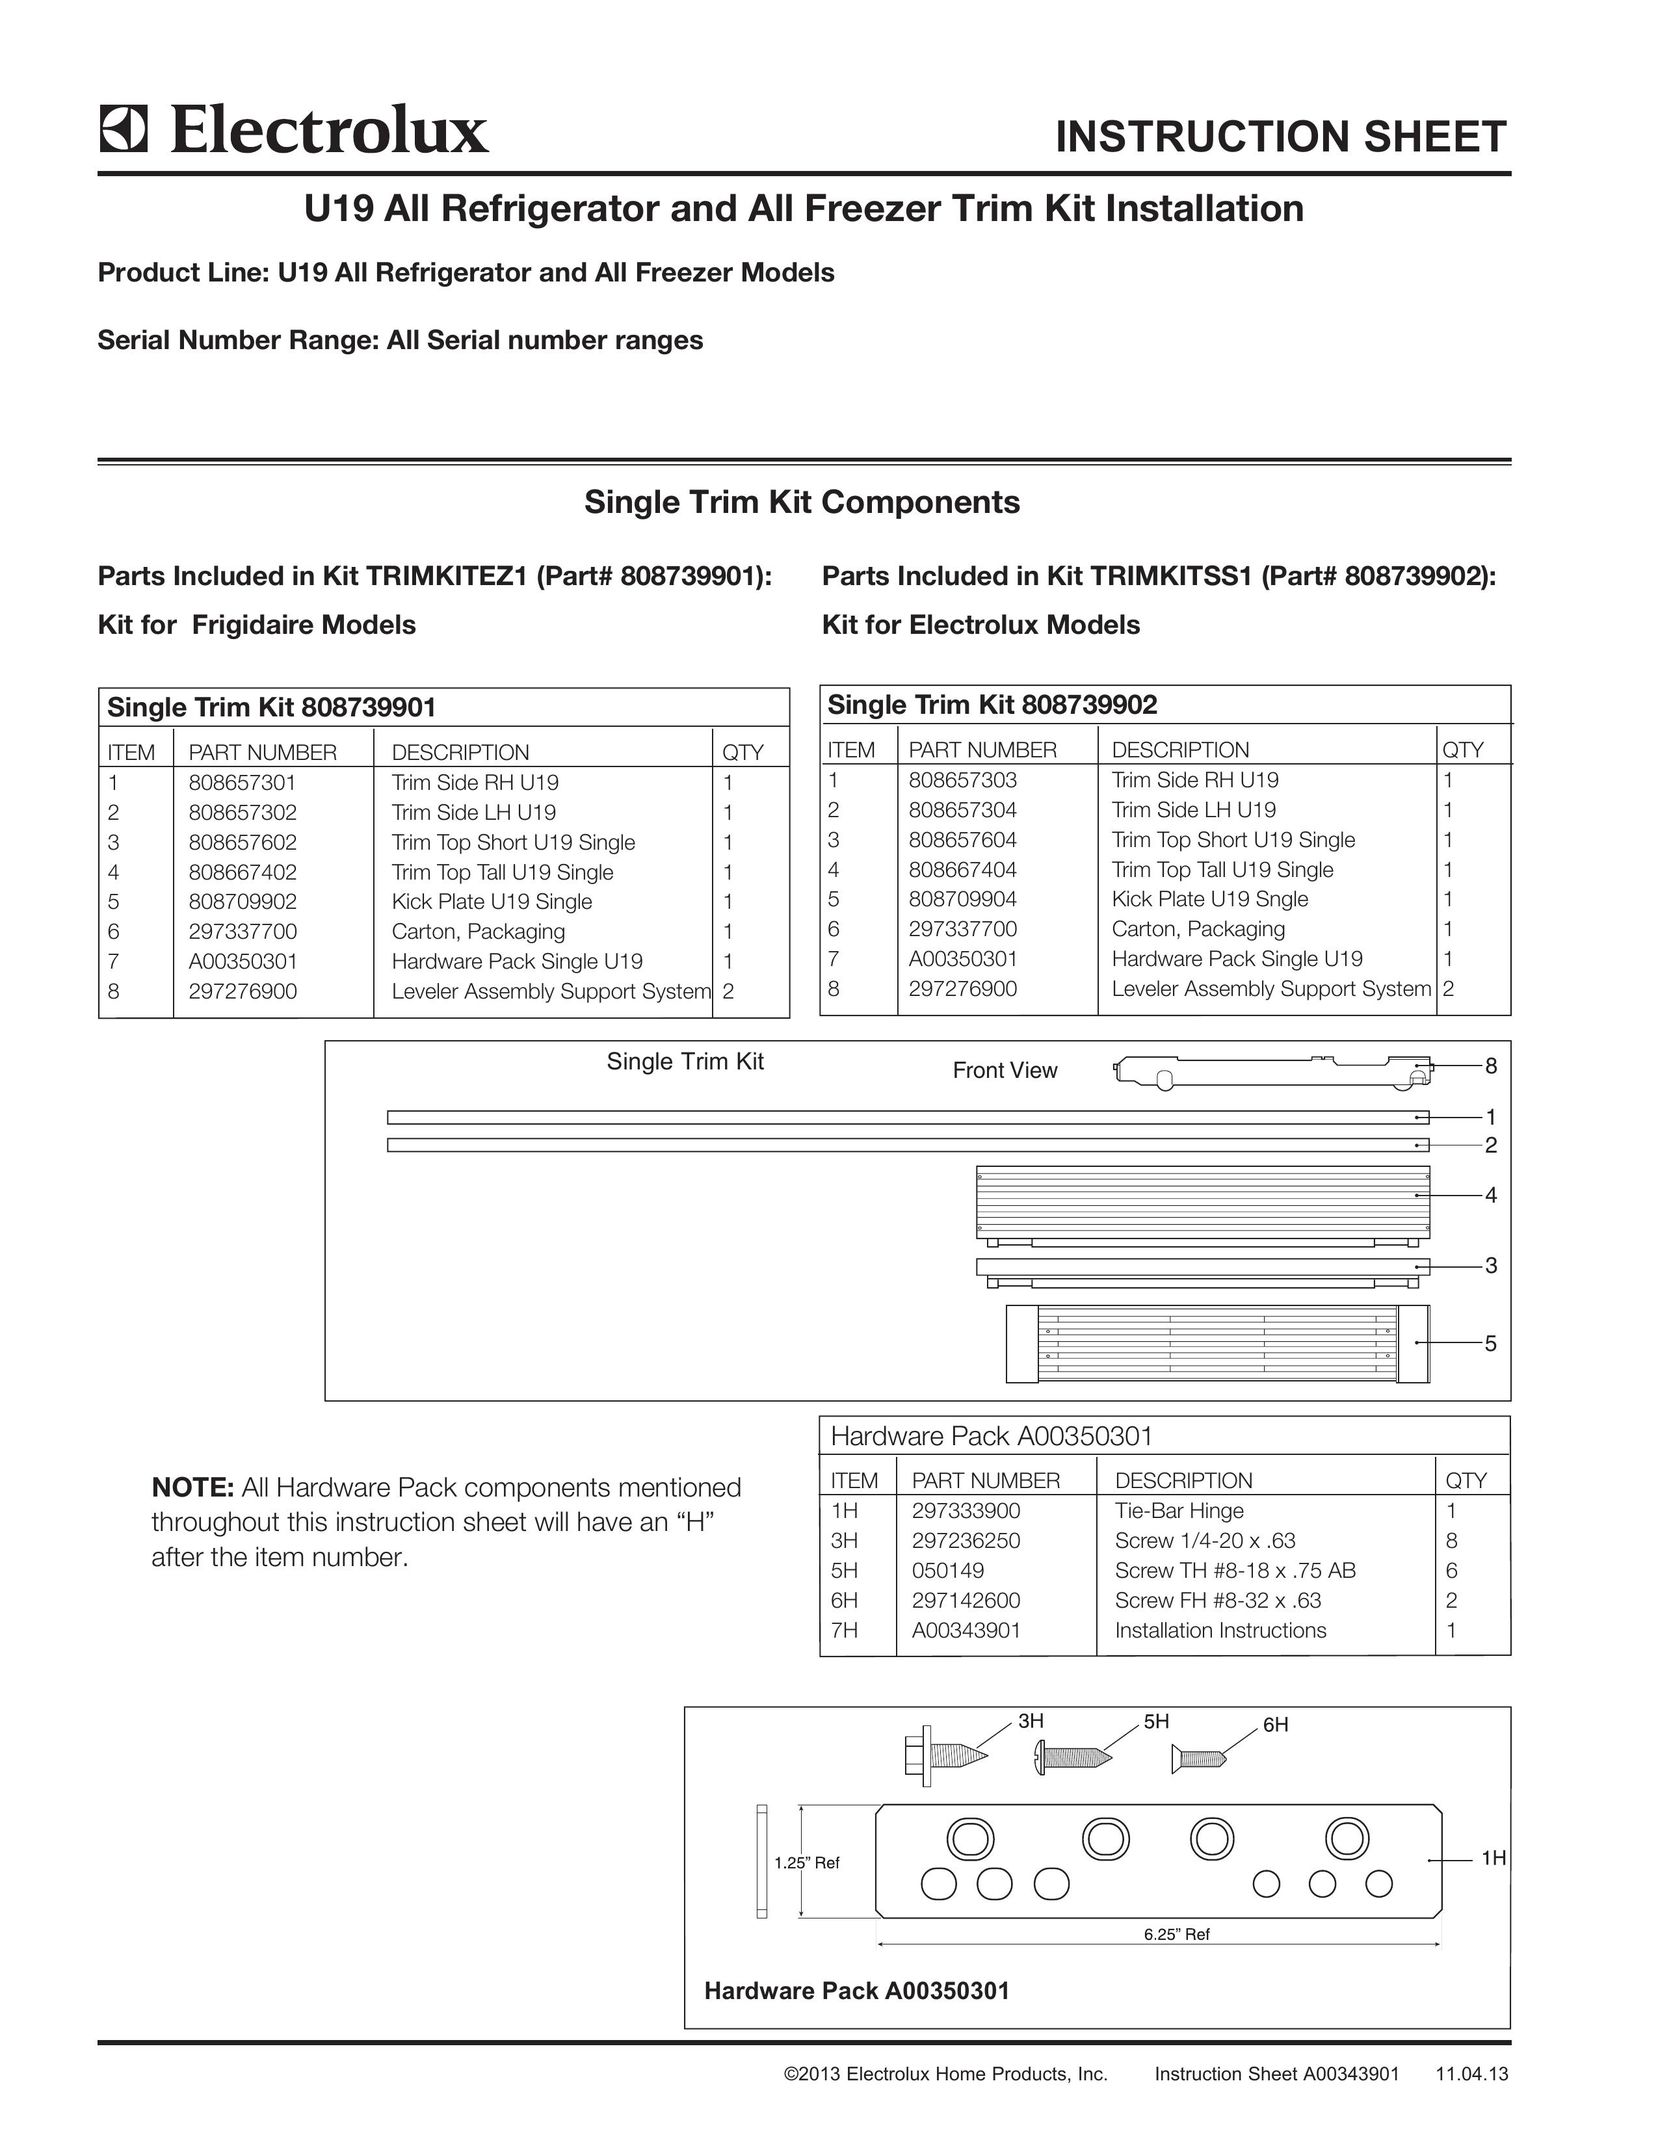 Electrolux TRIMKITEZ1 Appliance Trim Kit User Manual